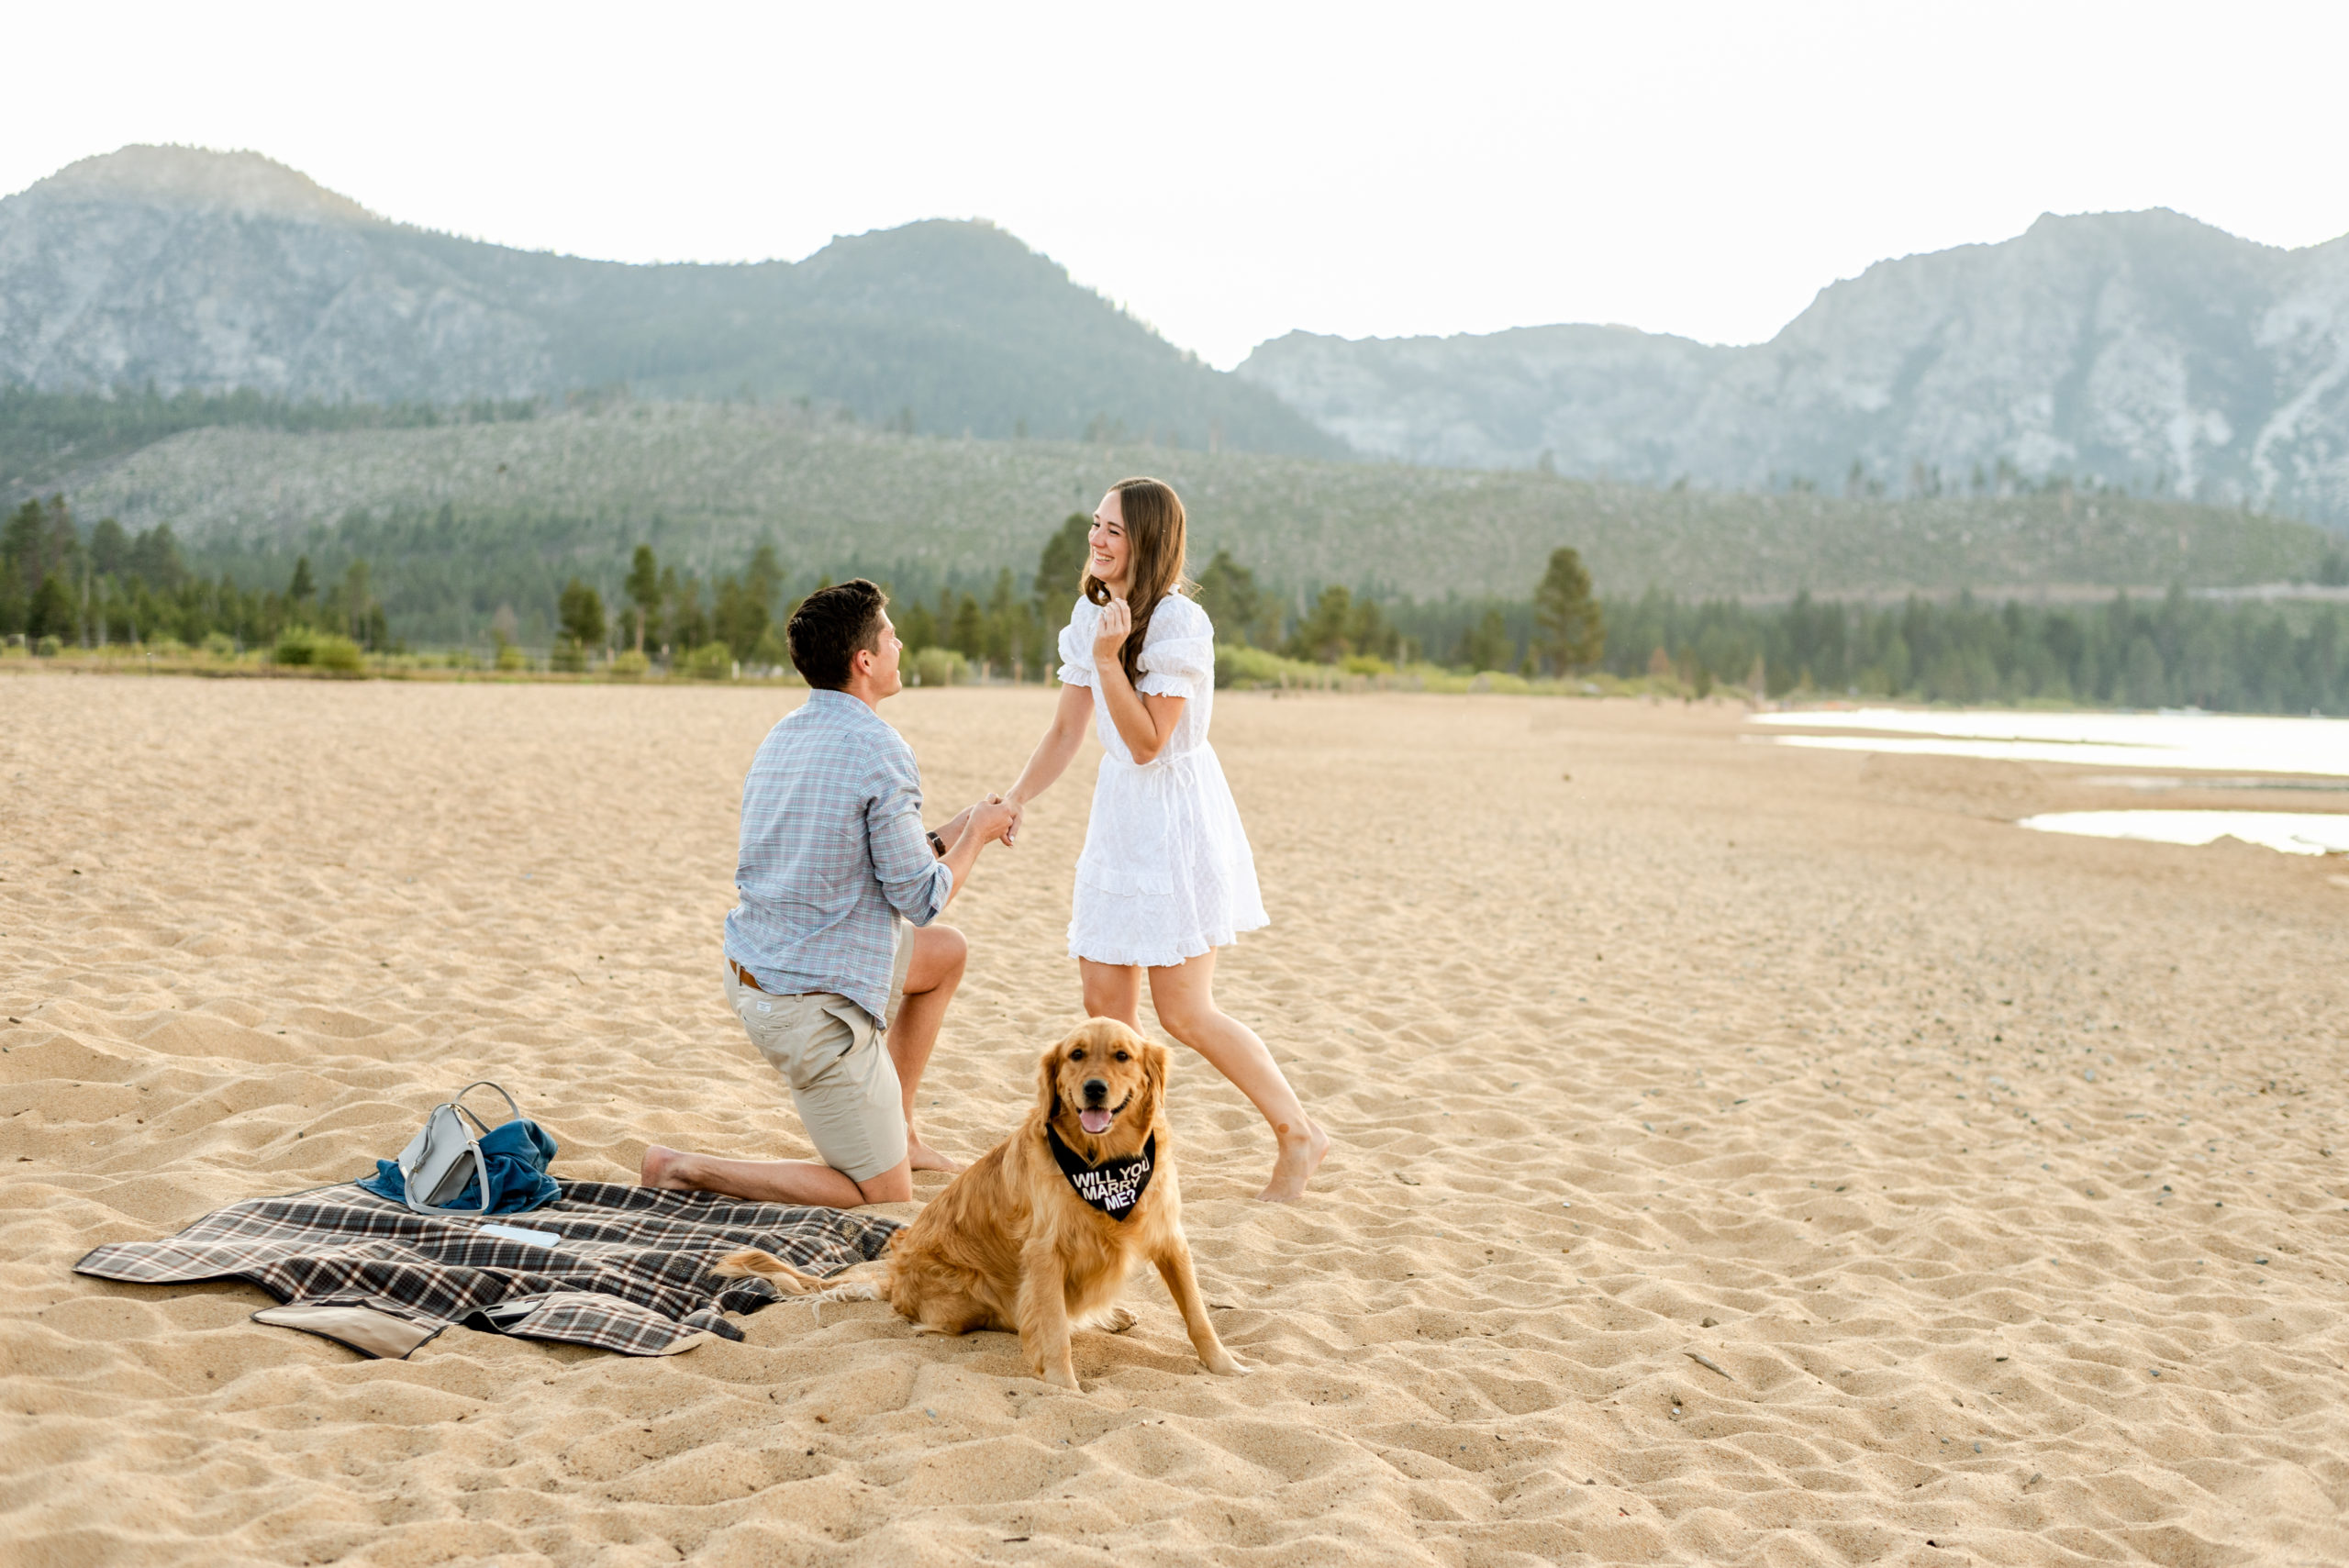 Guy proposing on beach in lake tahoe